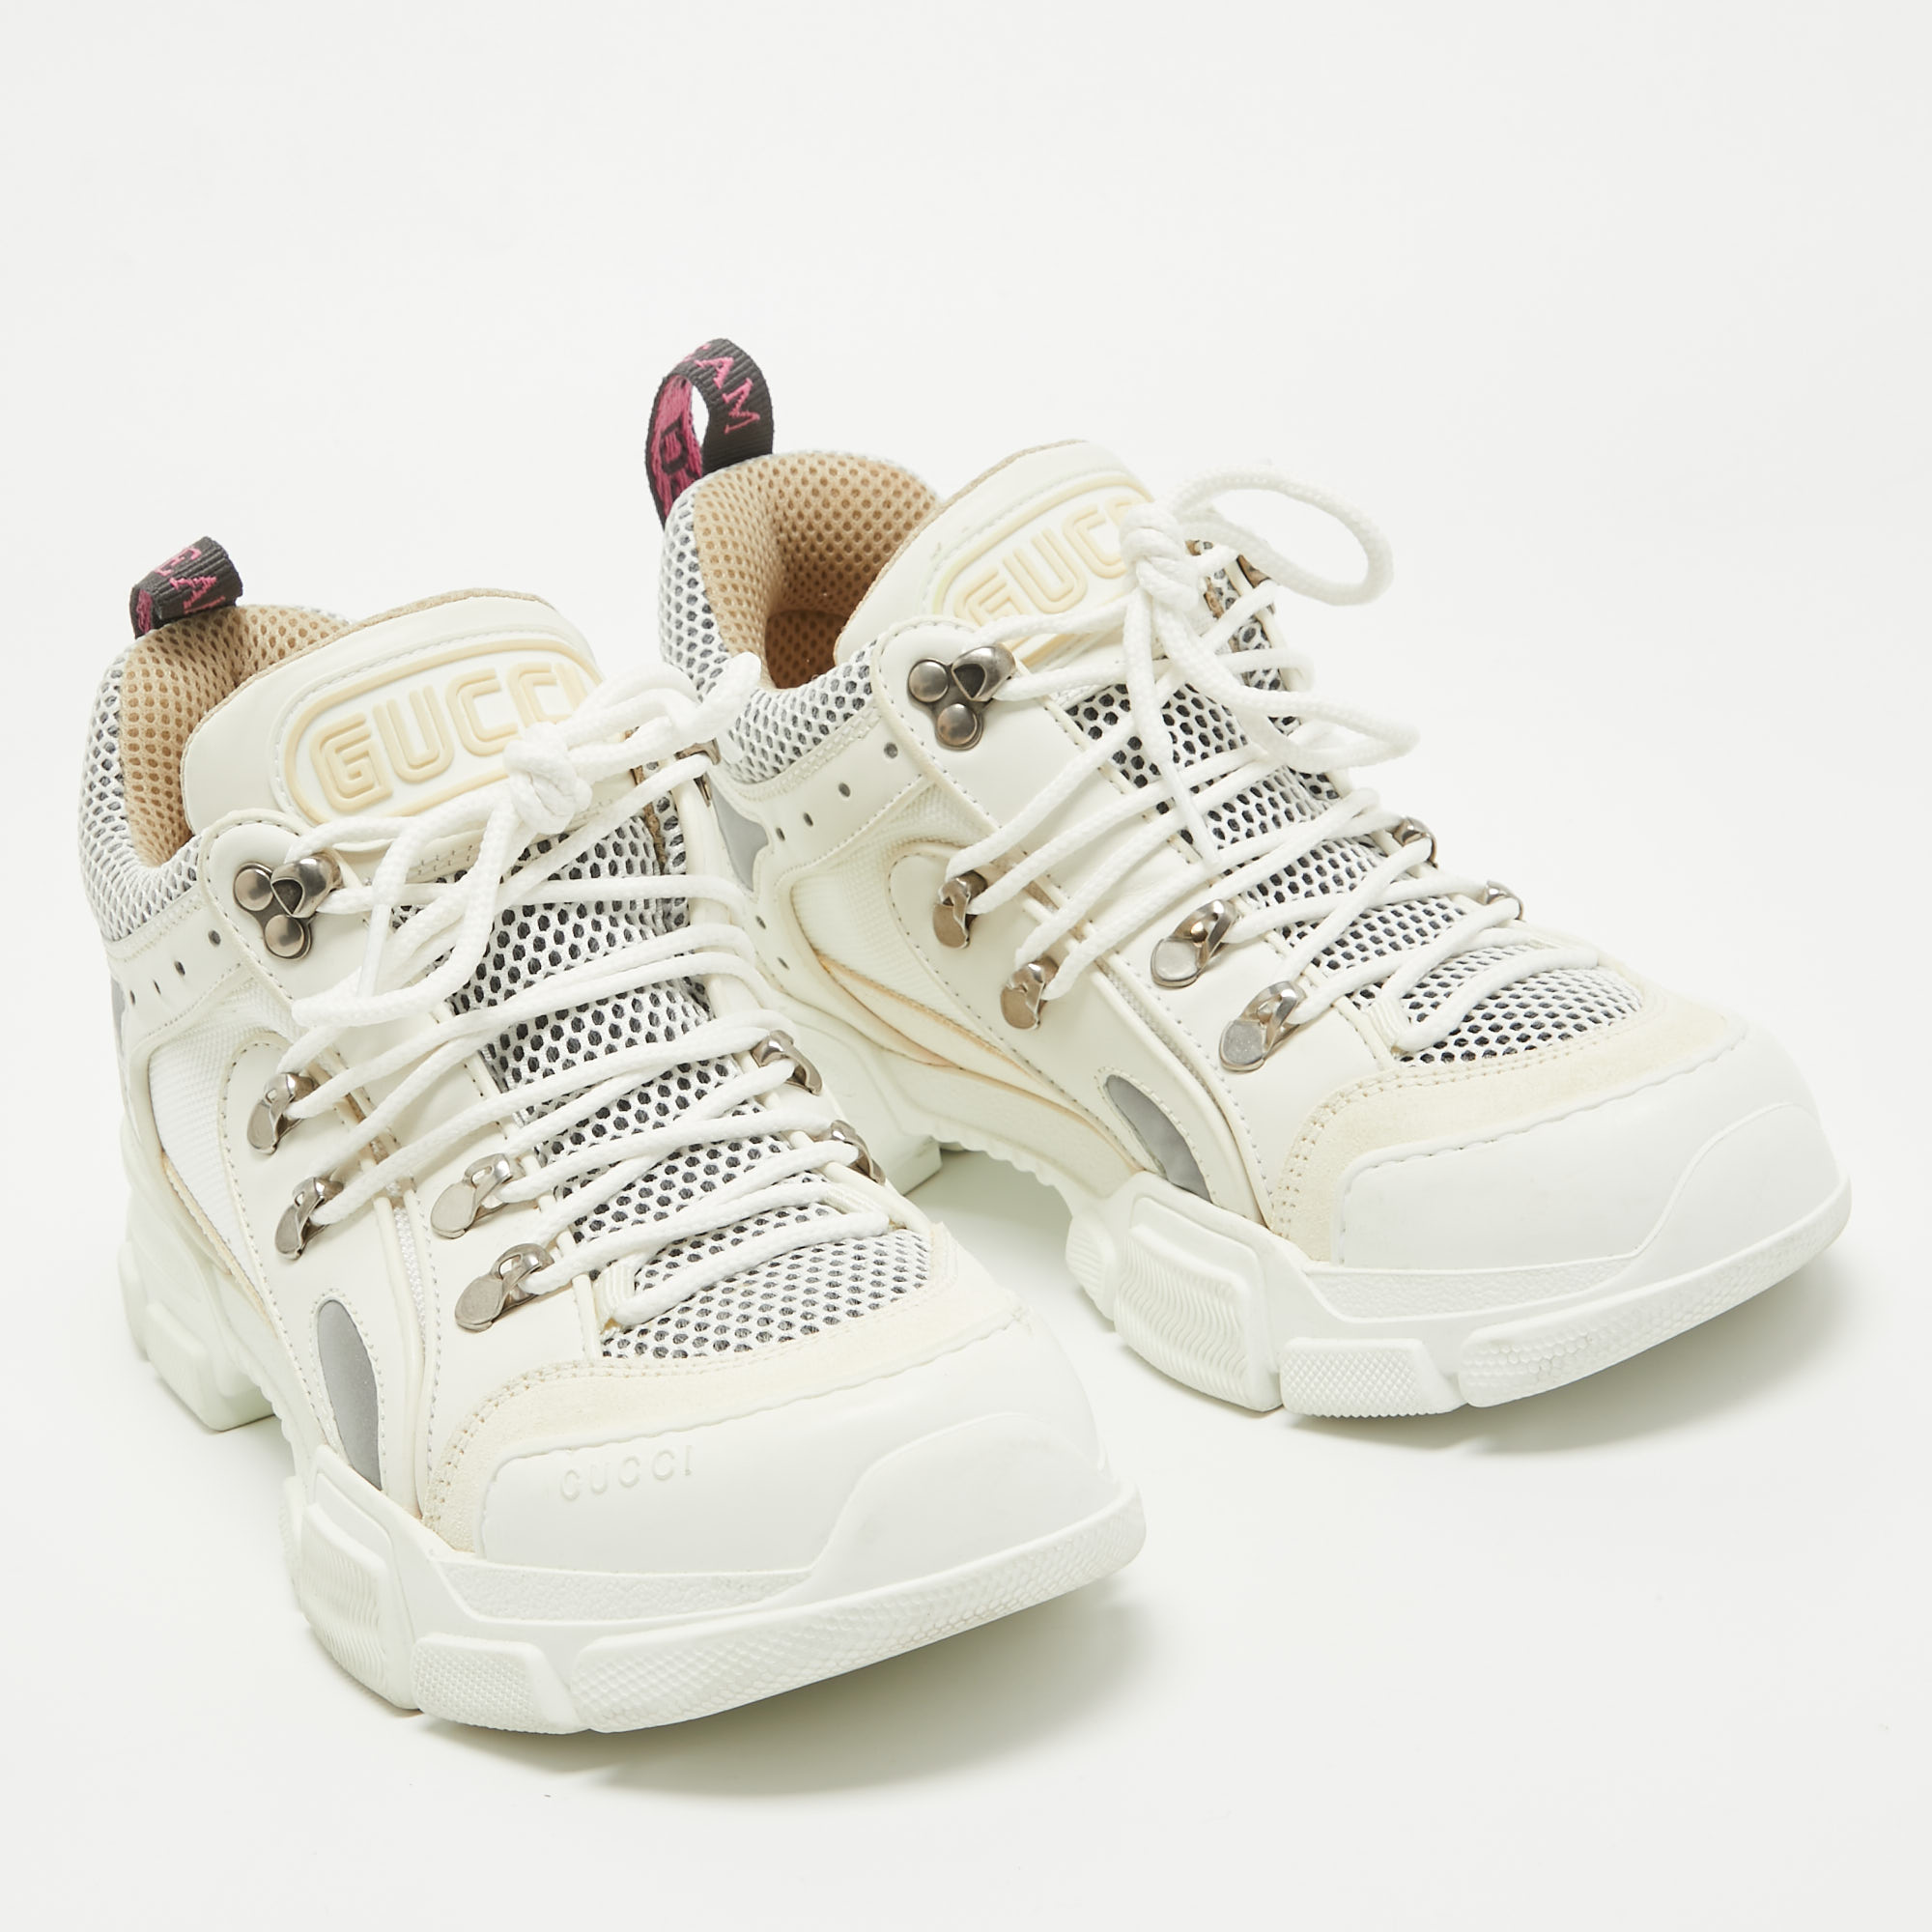 Gucci White/Cream Canvas Leather Flashtrek Sneakers Size 39.5